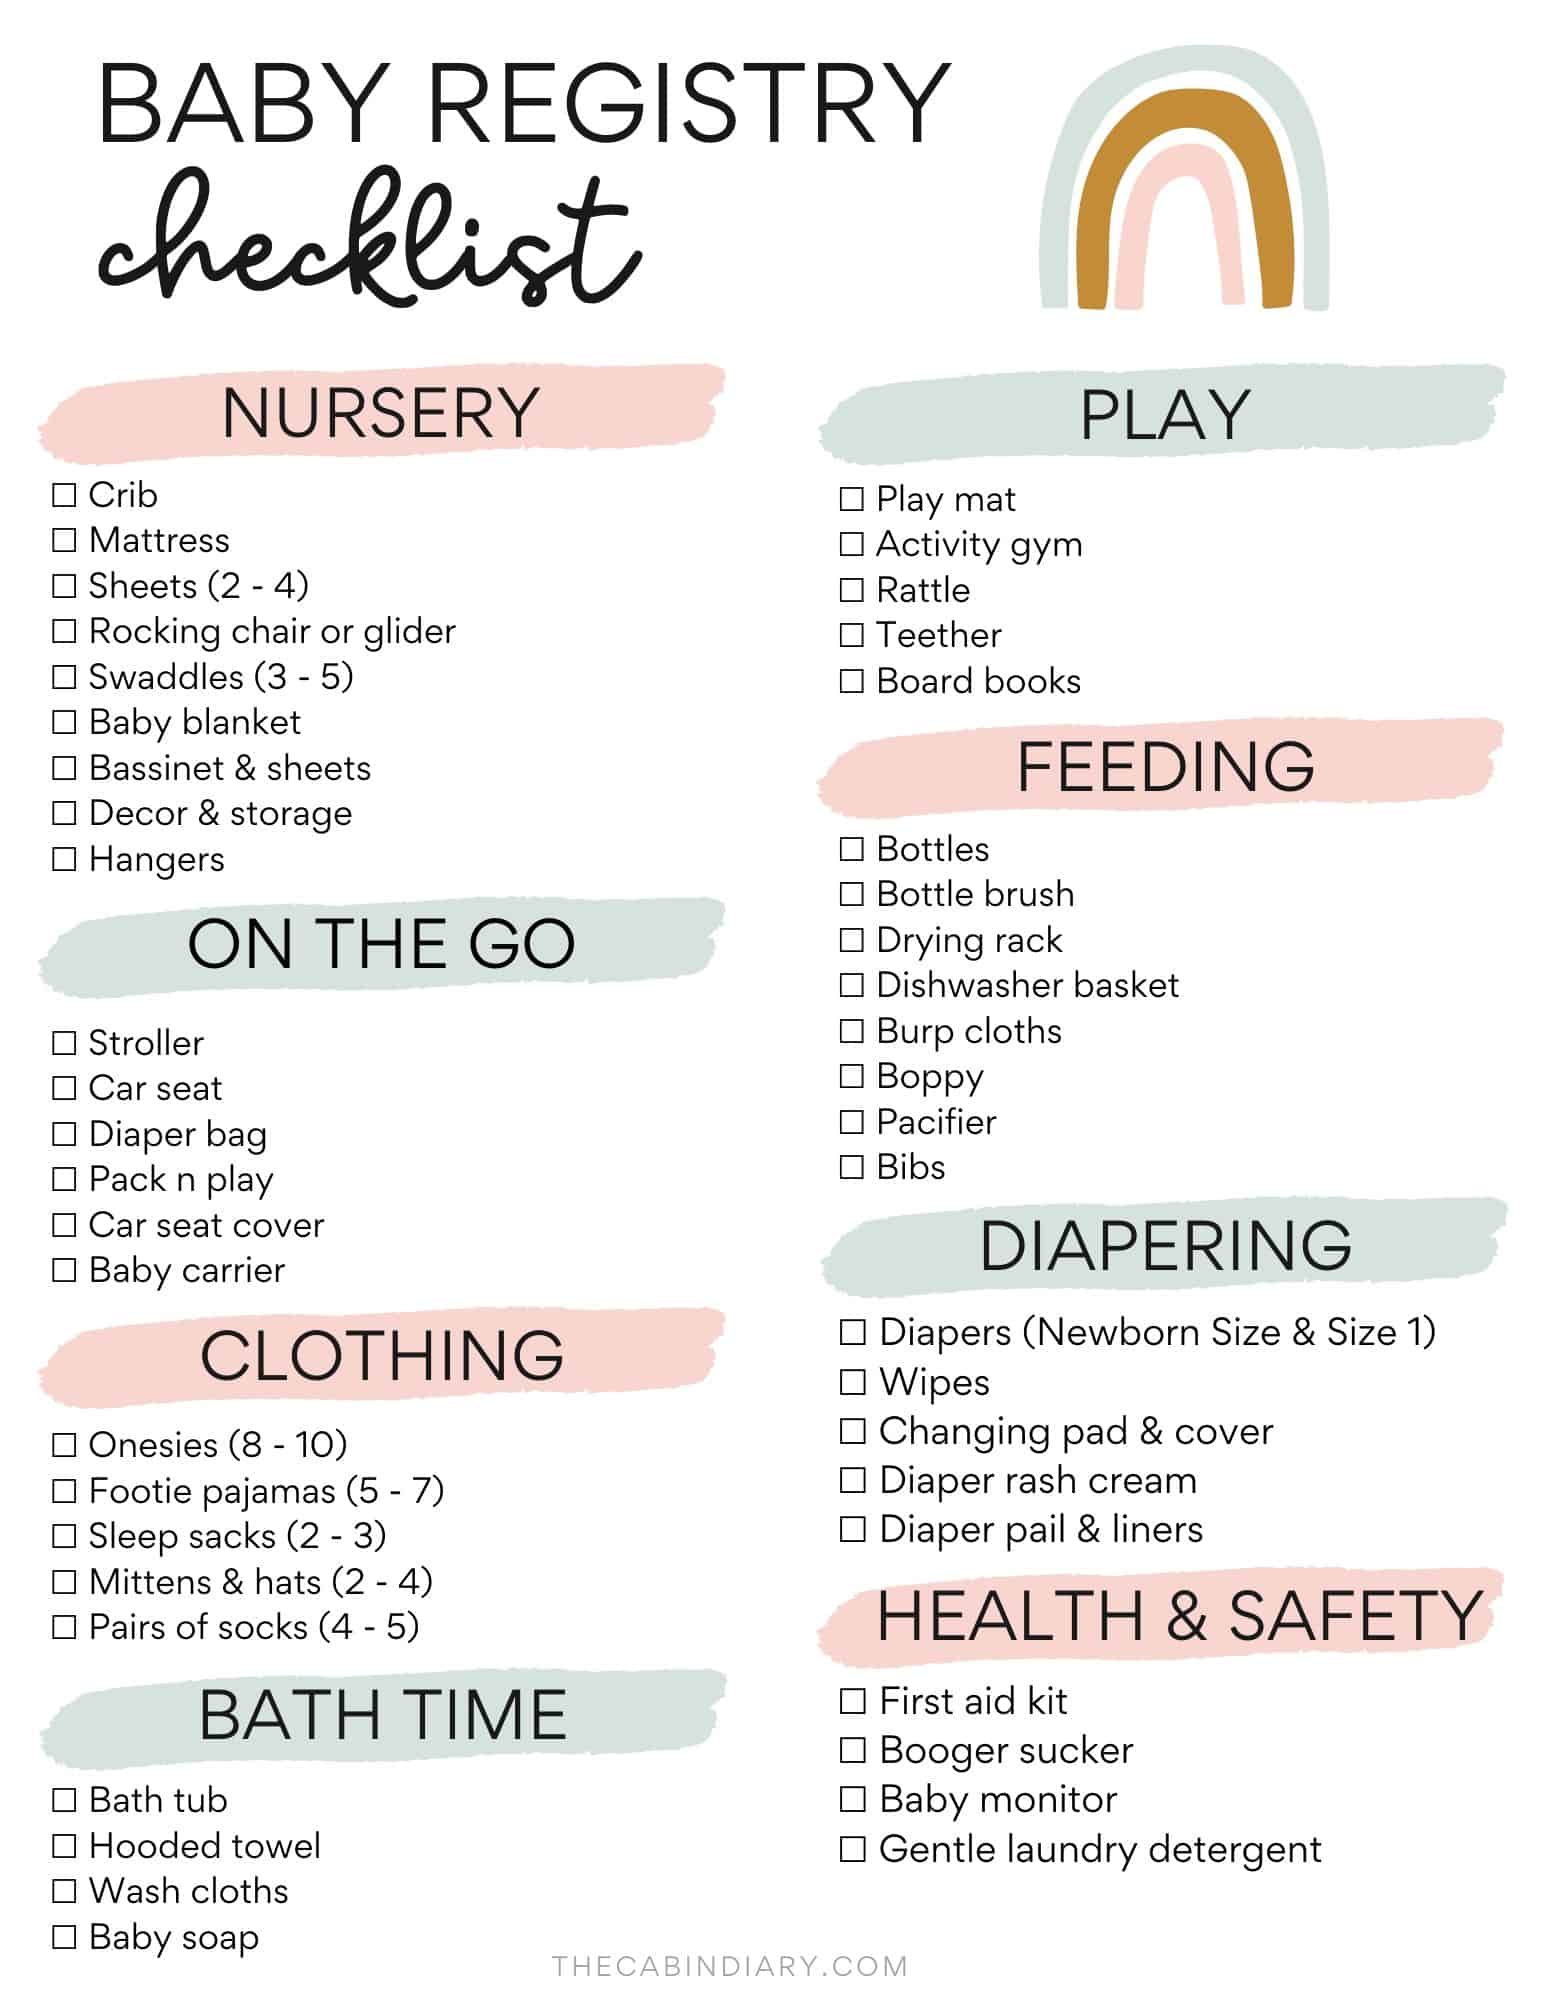 Baby Registry Checklist Image